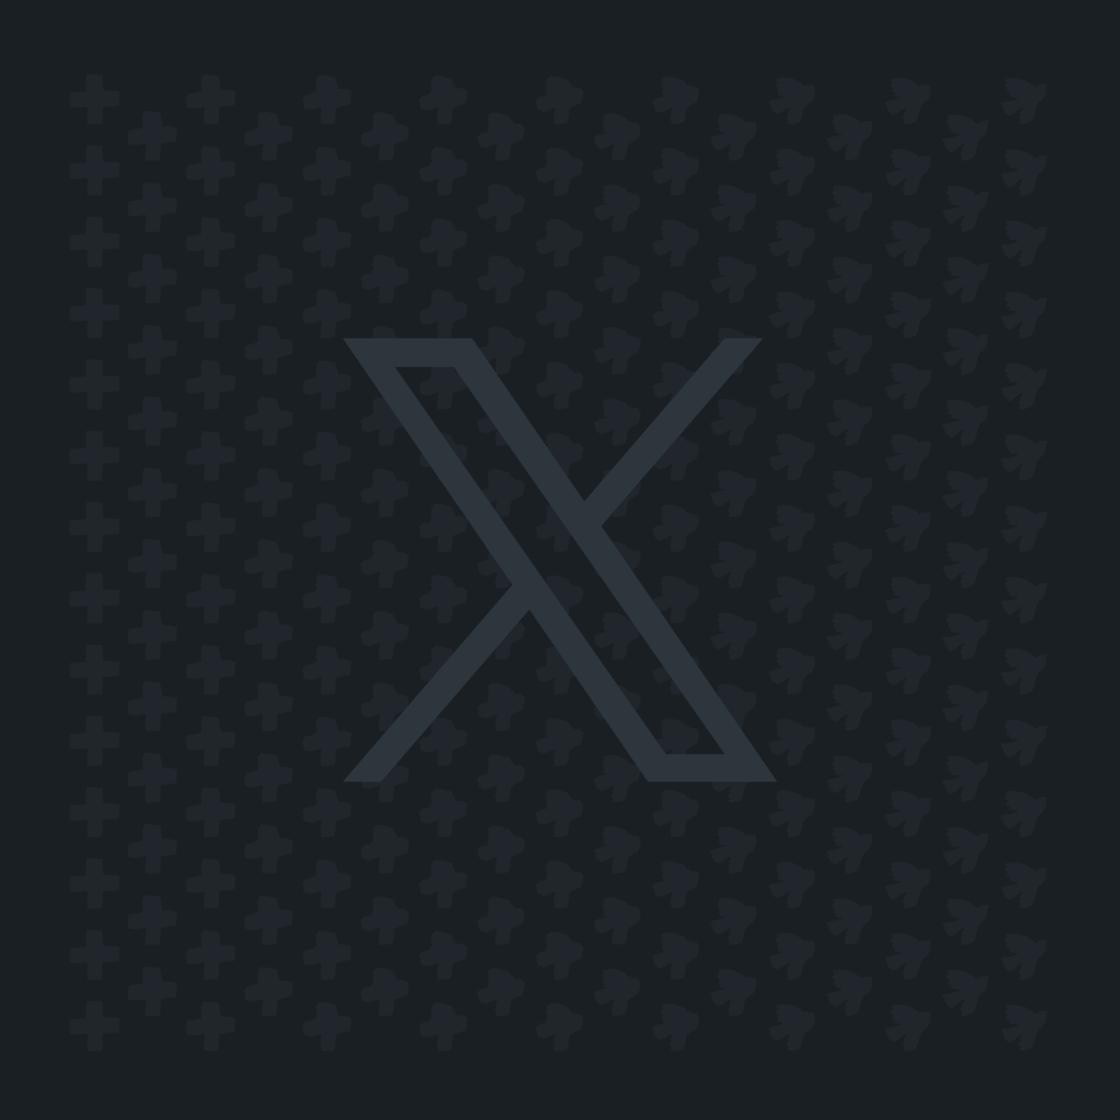 X / Twitter logo